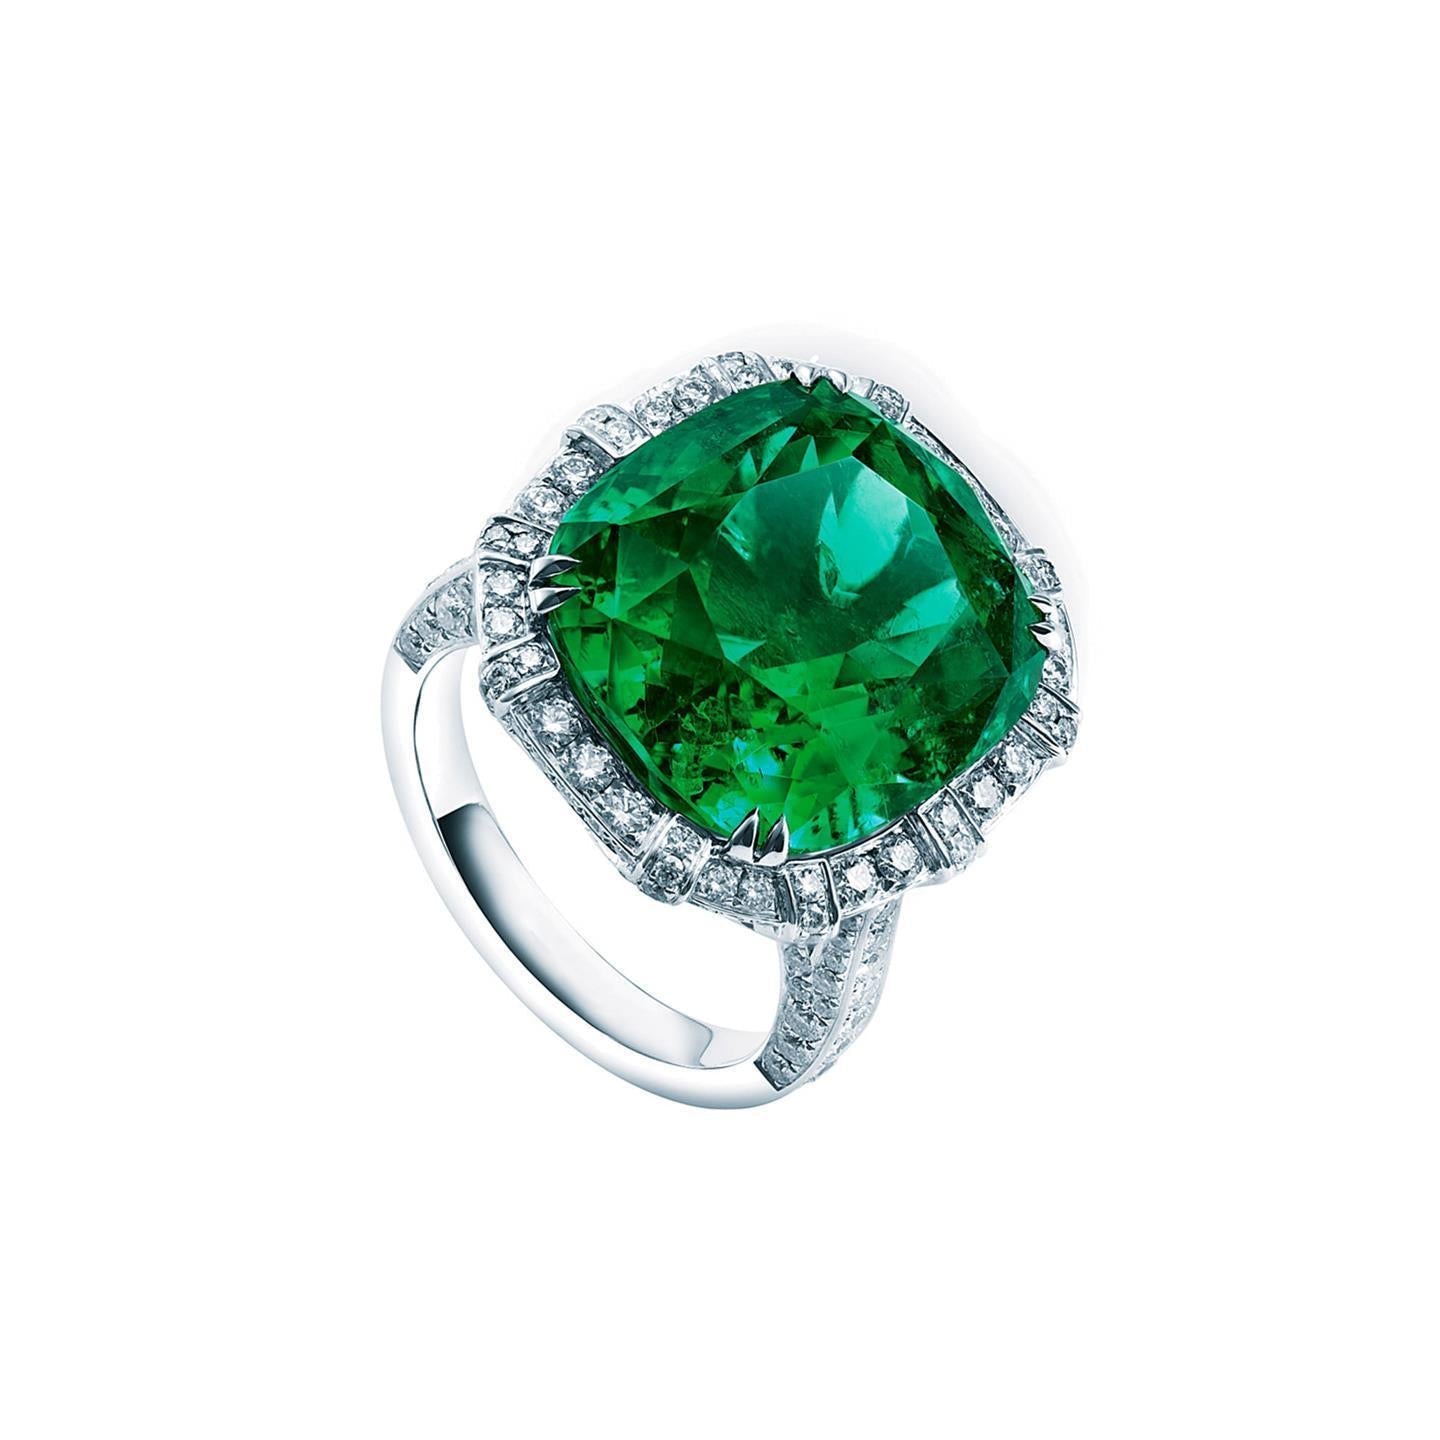 Kolumbianischer grüner Smaragd mit Diamanten Ring 4 Karat